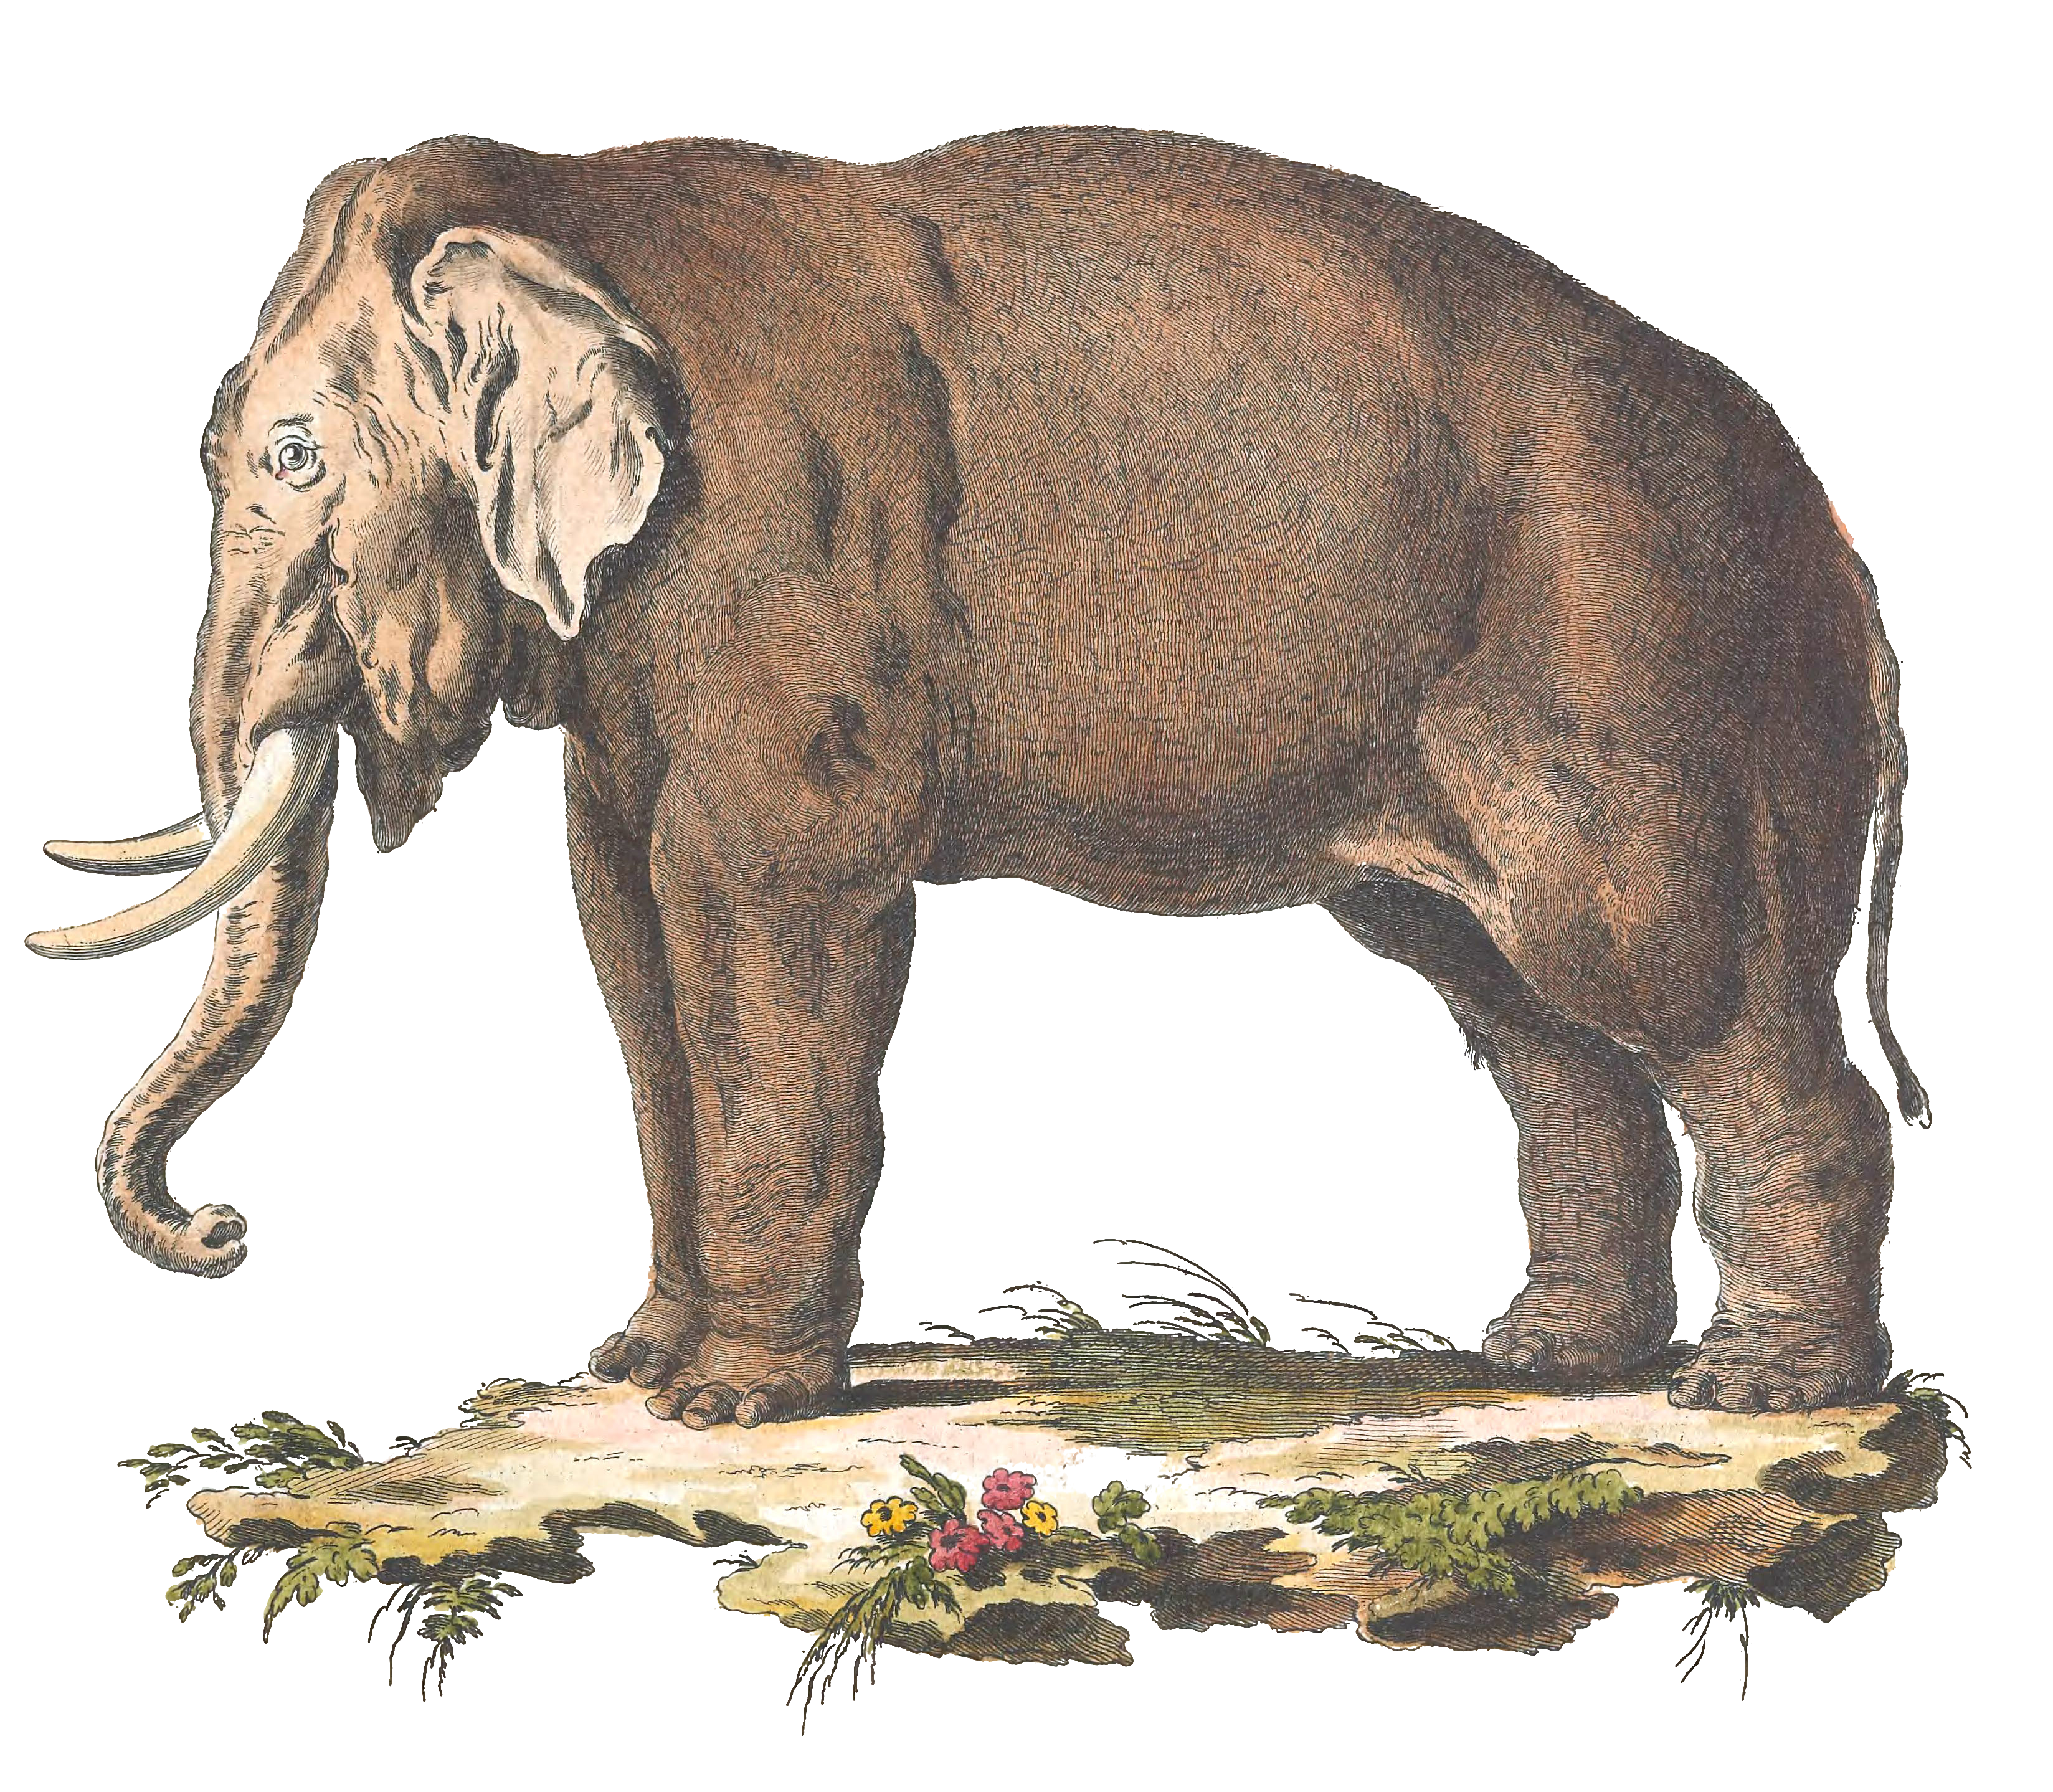 Elephant Vintage Illustration from 1775